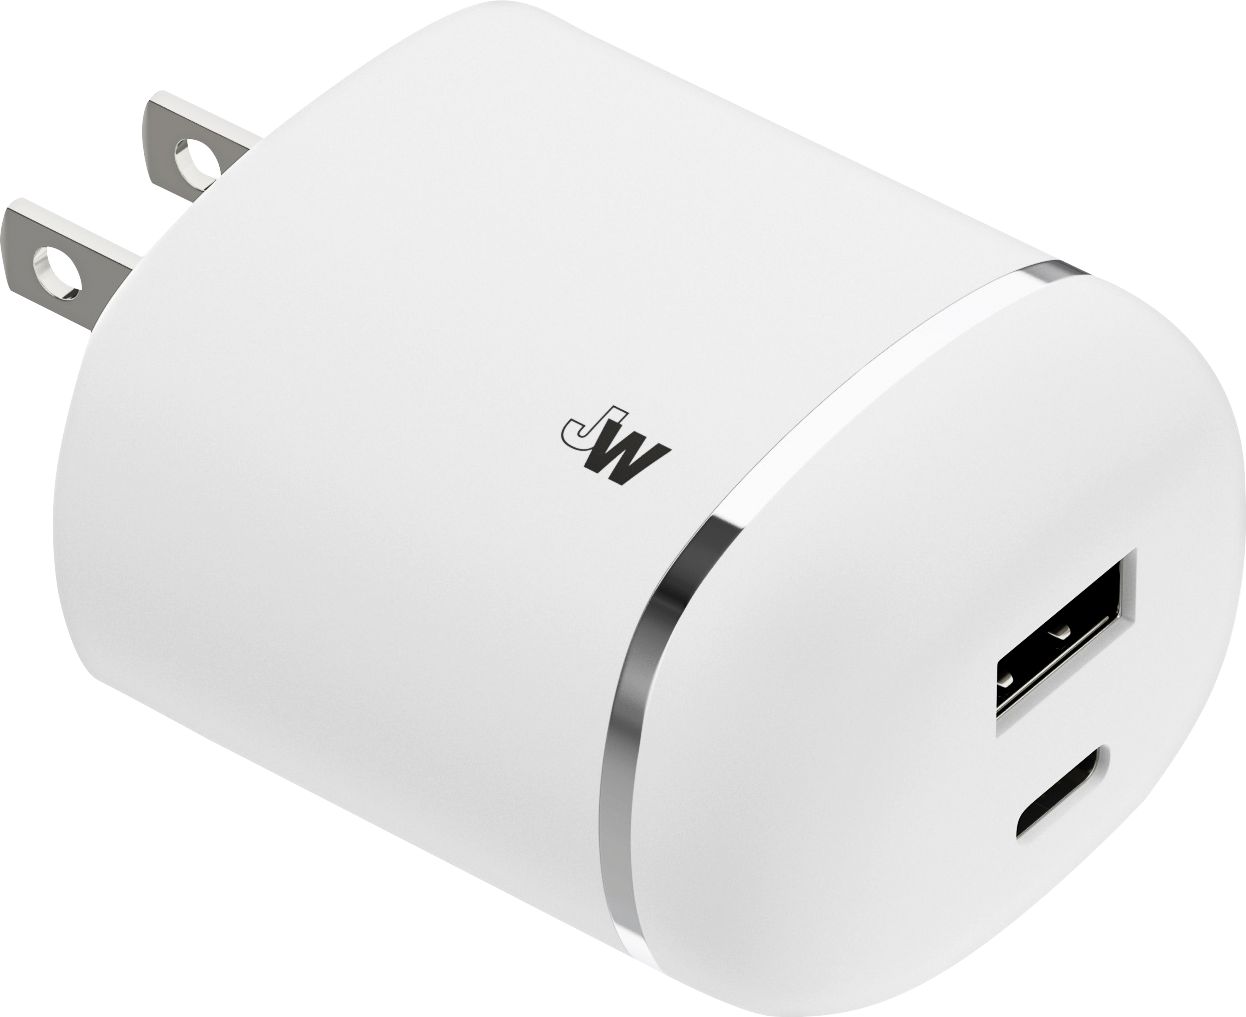 Just Wireless - Power Adapter - White